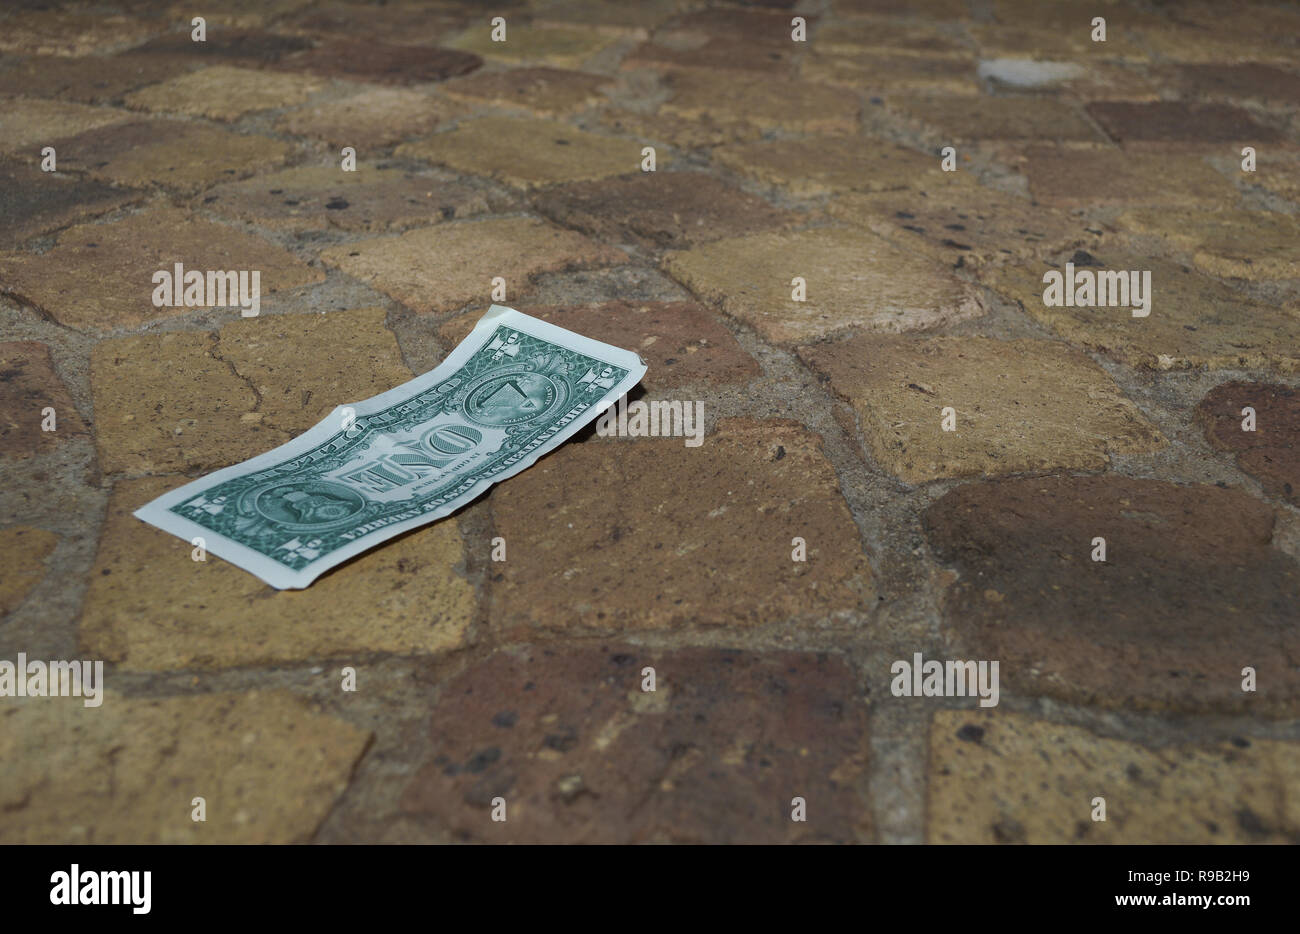 Finding Money On The Floor Stock Photo